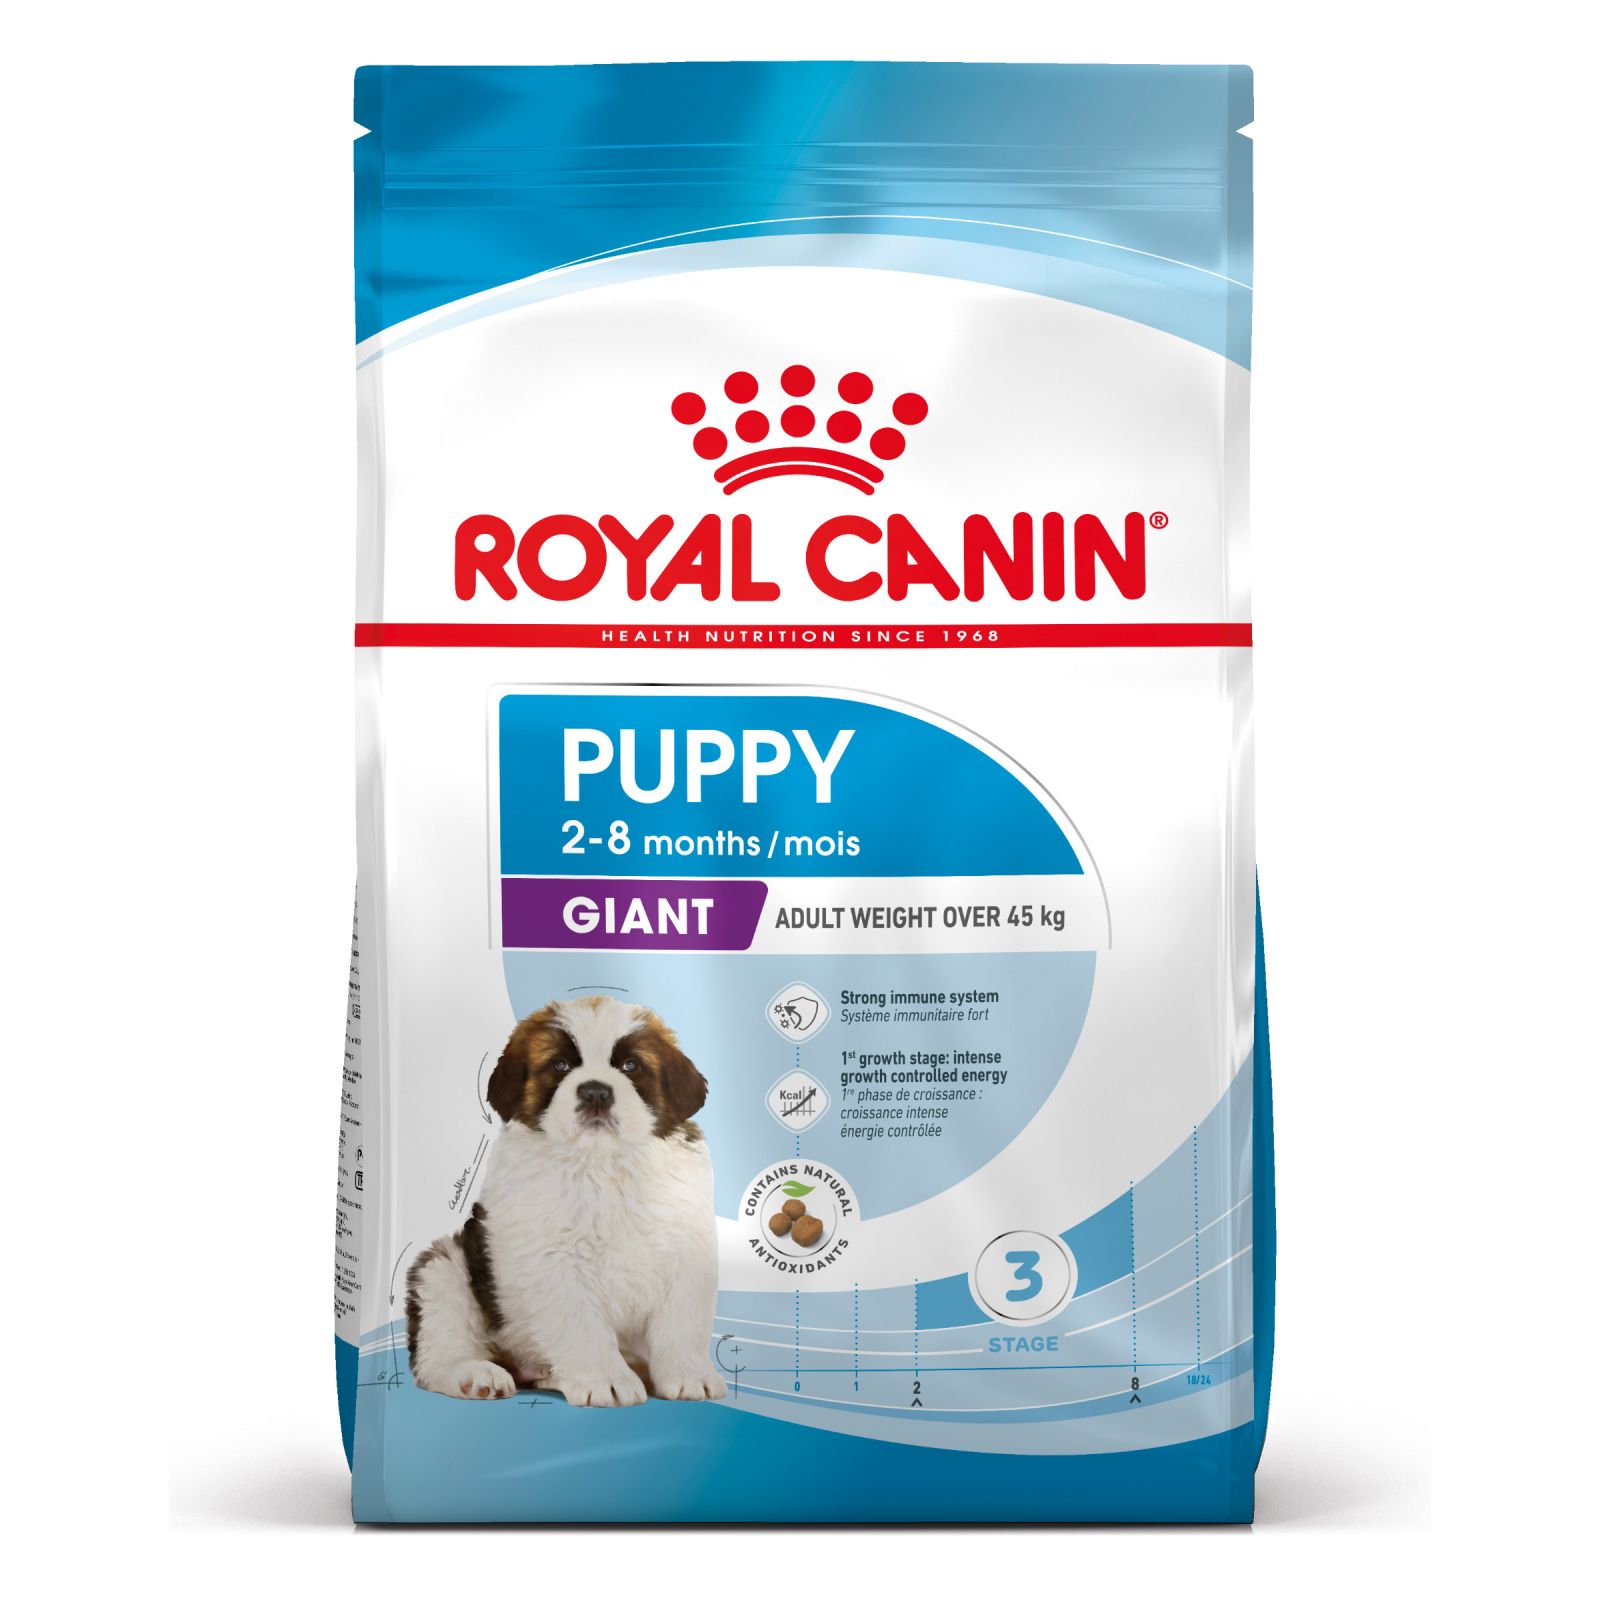 Royal Canin Giant Dog Puppy, croquettes Premium pour chiot / Direct-Vet